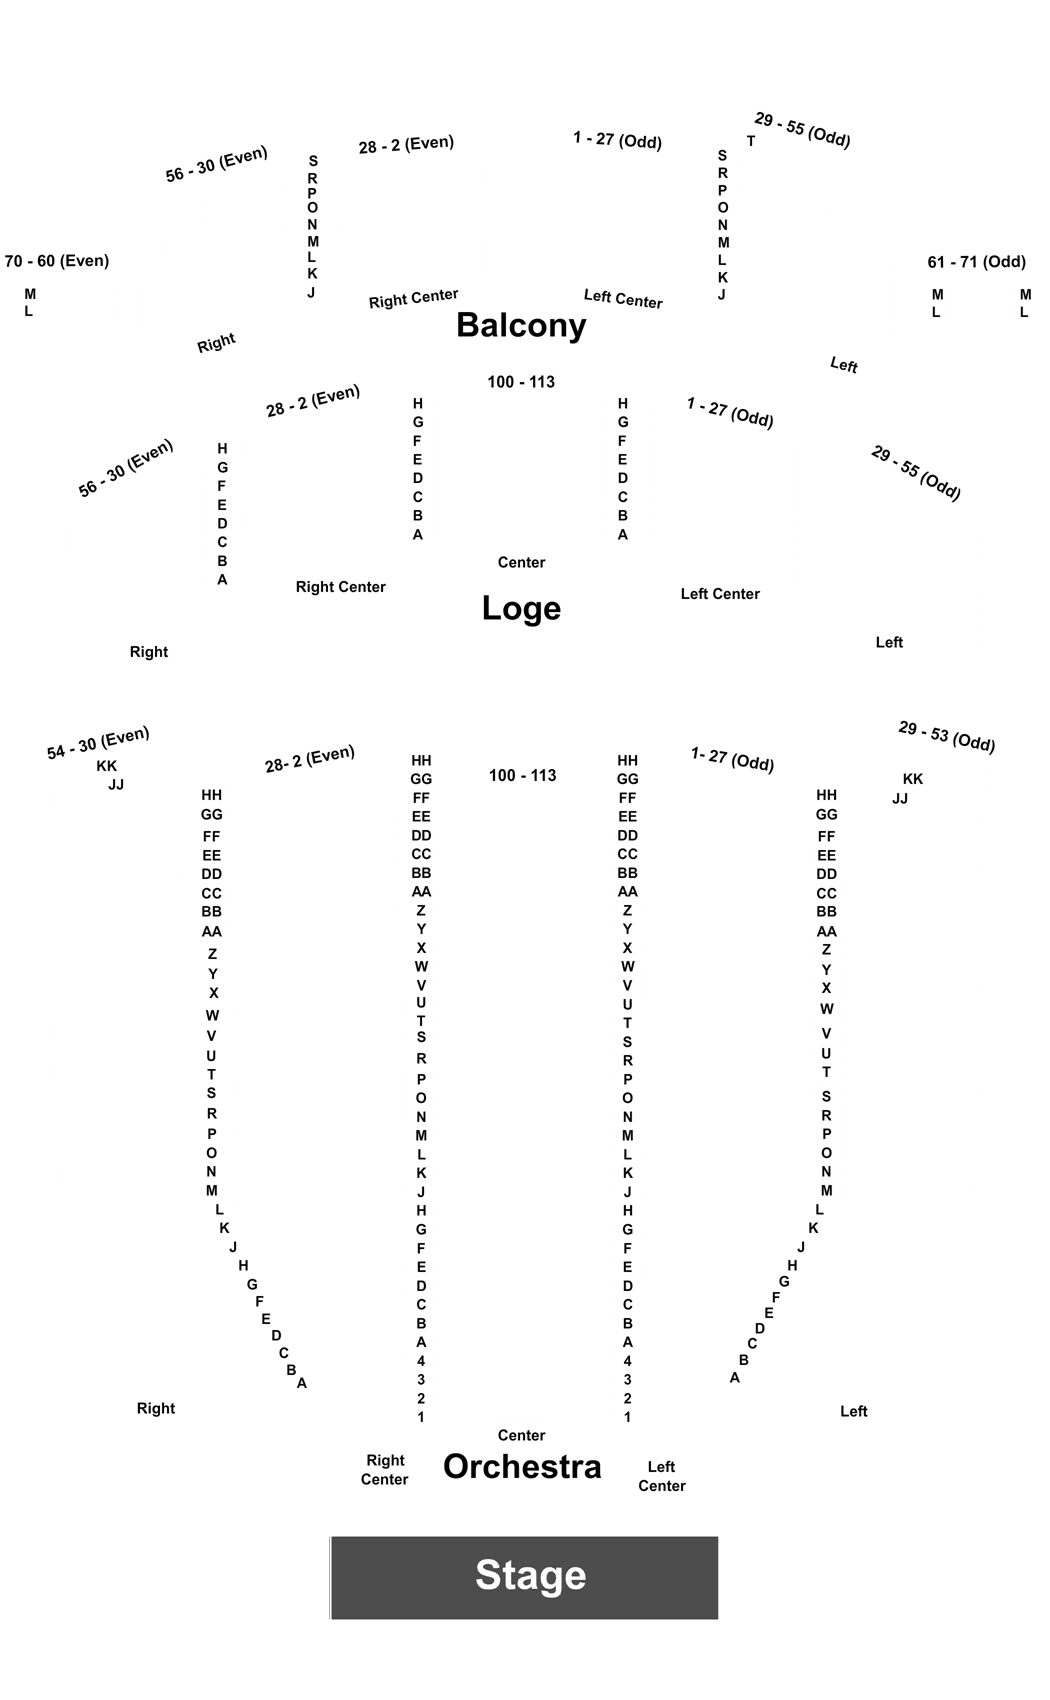 The Pasadena Civic Auditorium Seating Chart